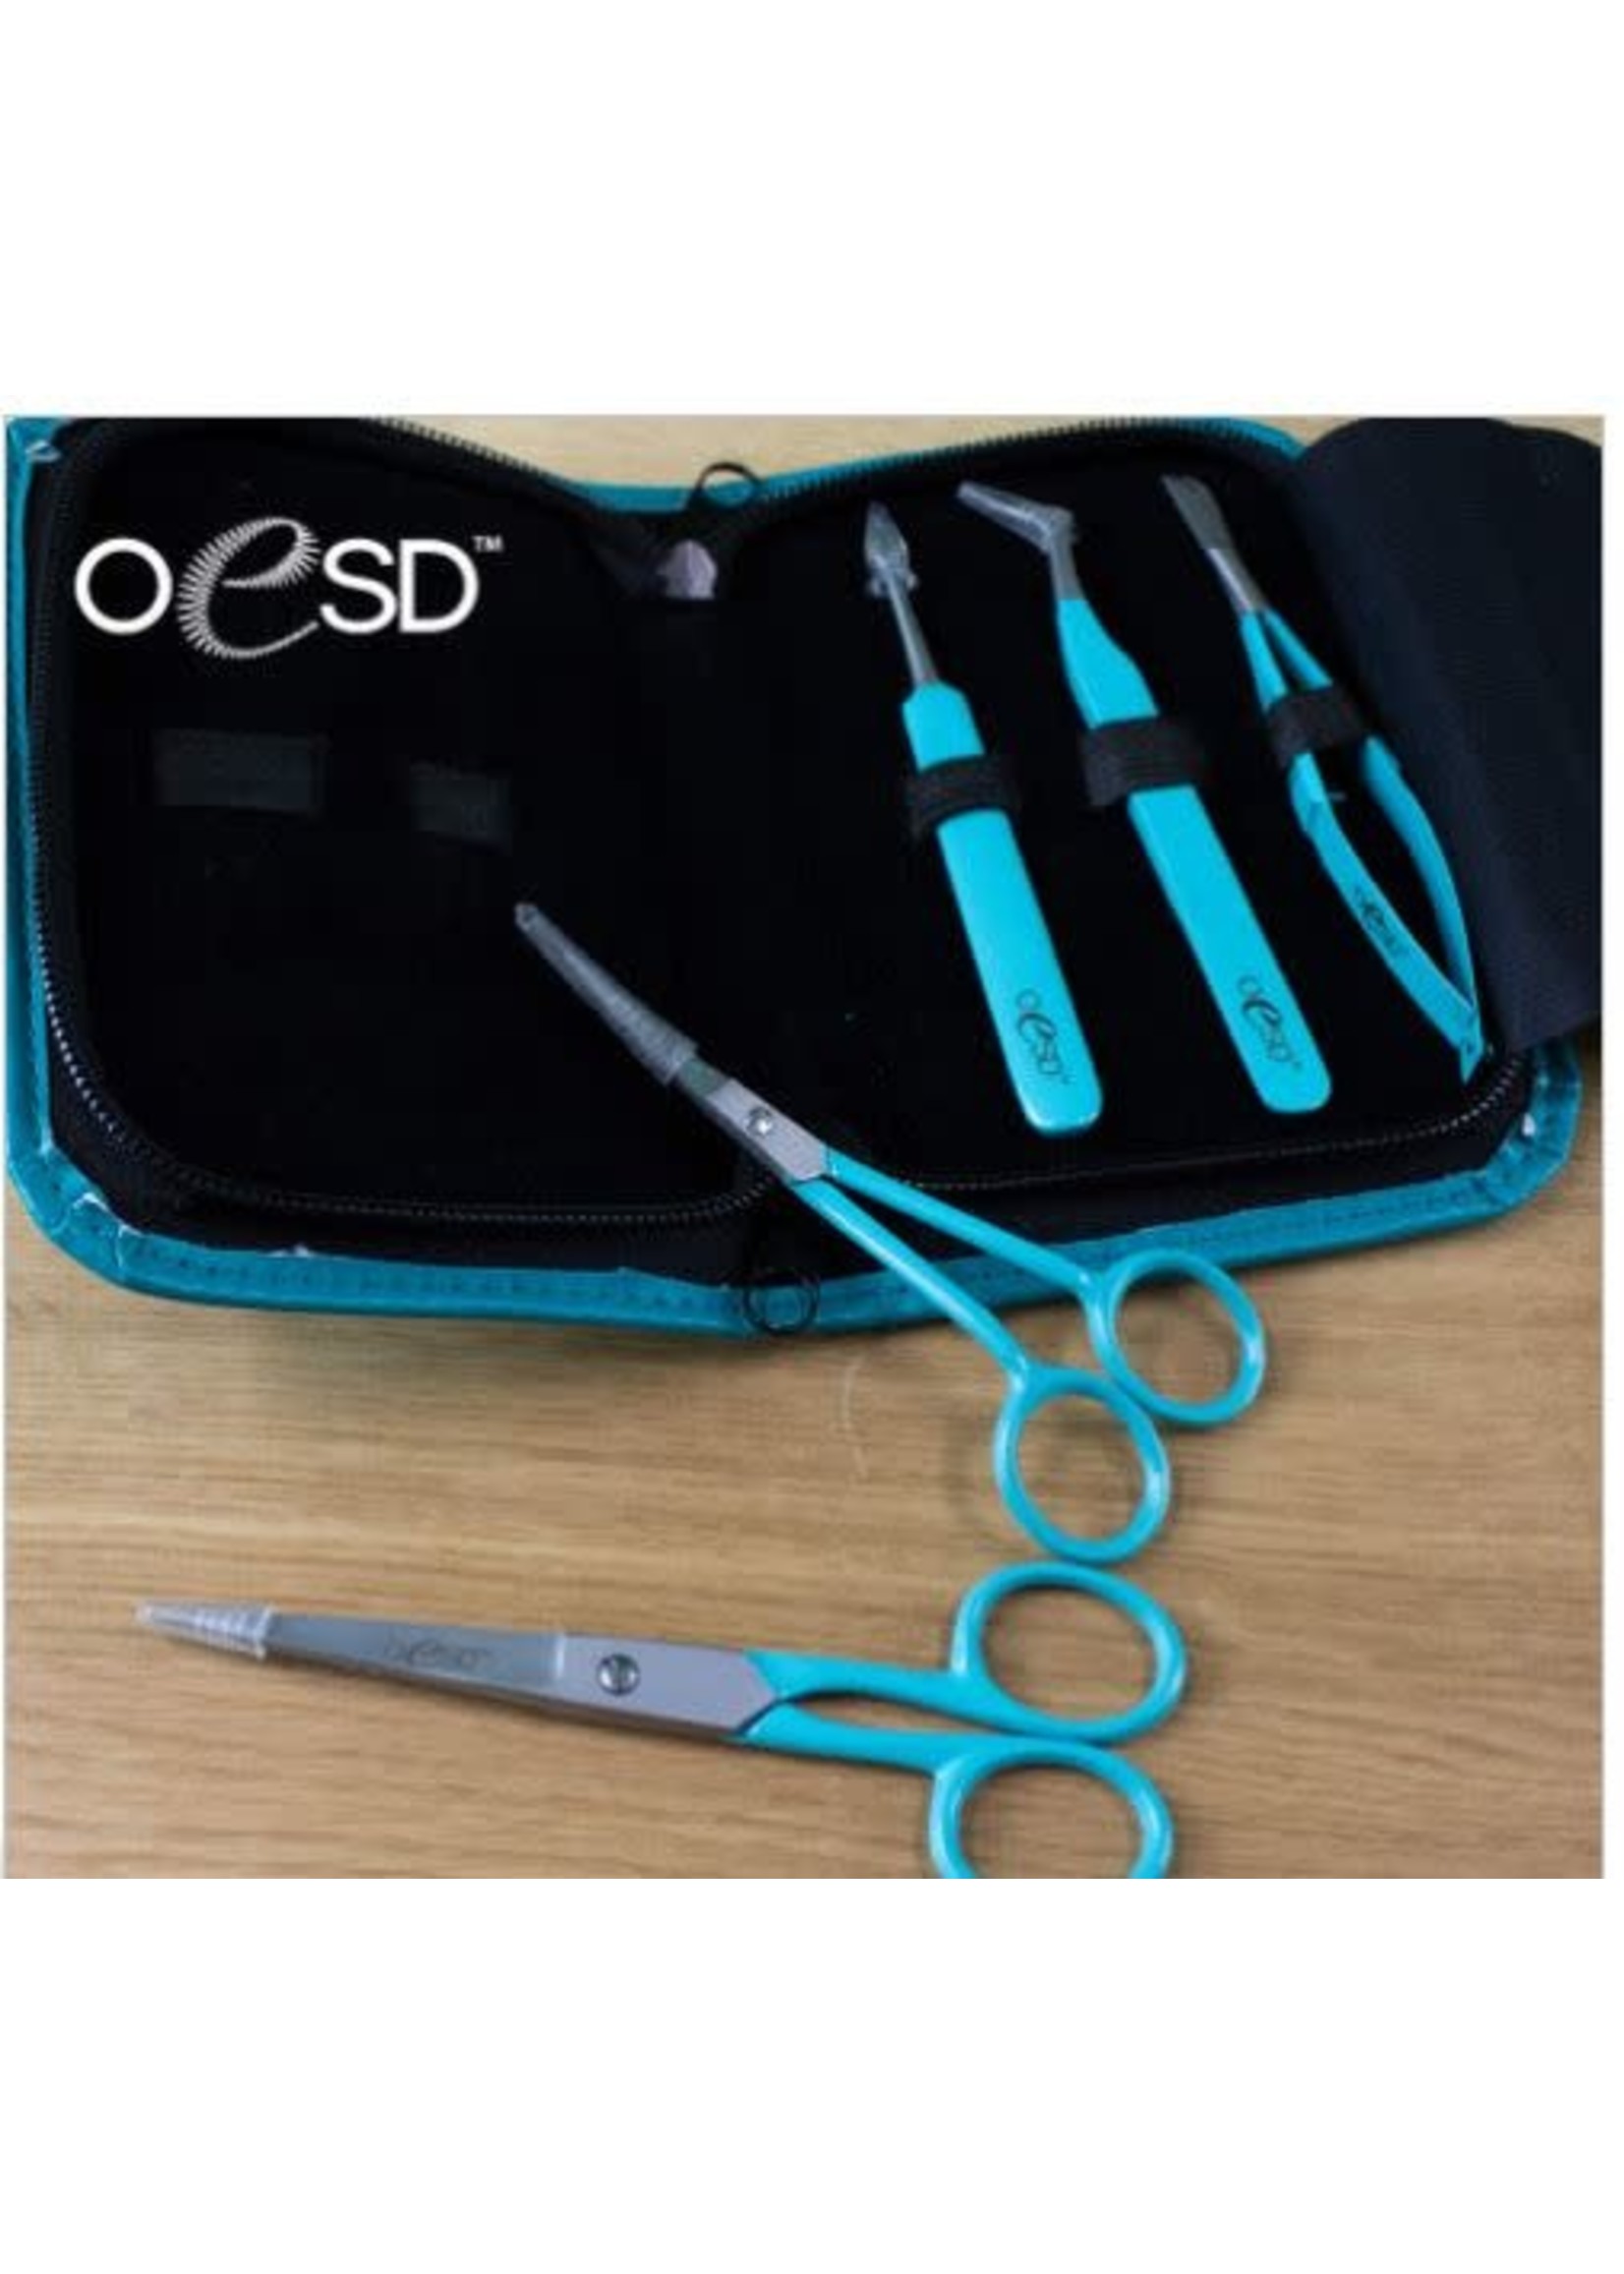 OESD Oesd 5 piece scissor kit